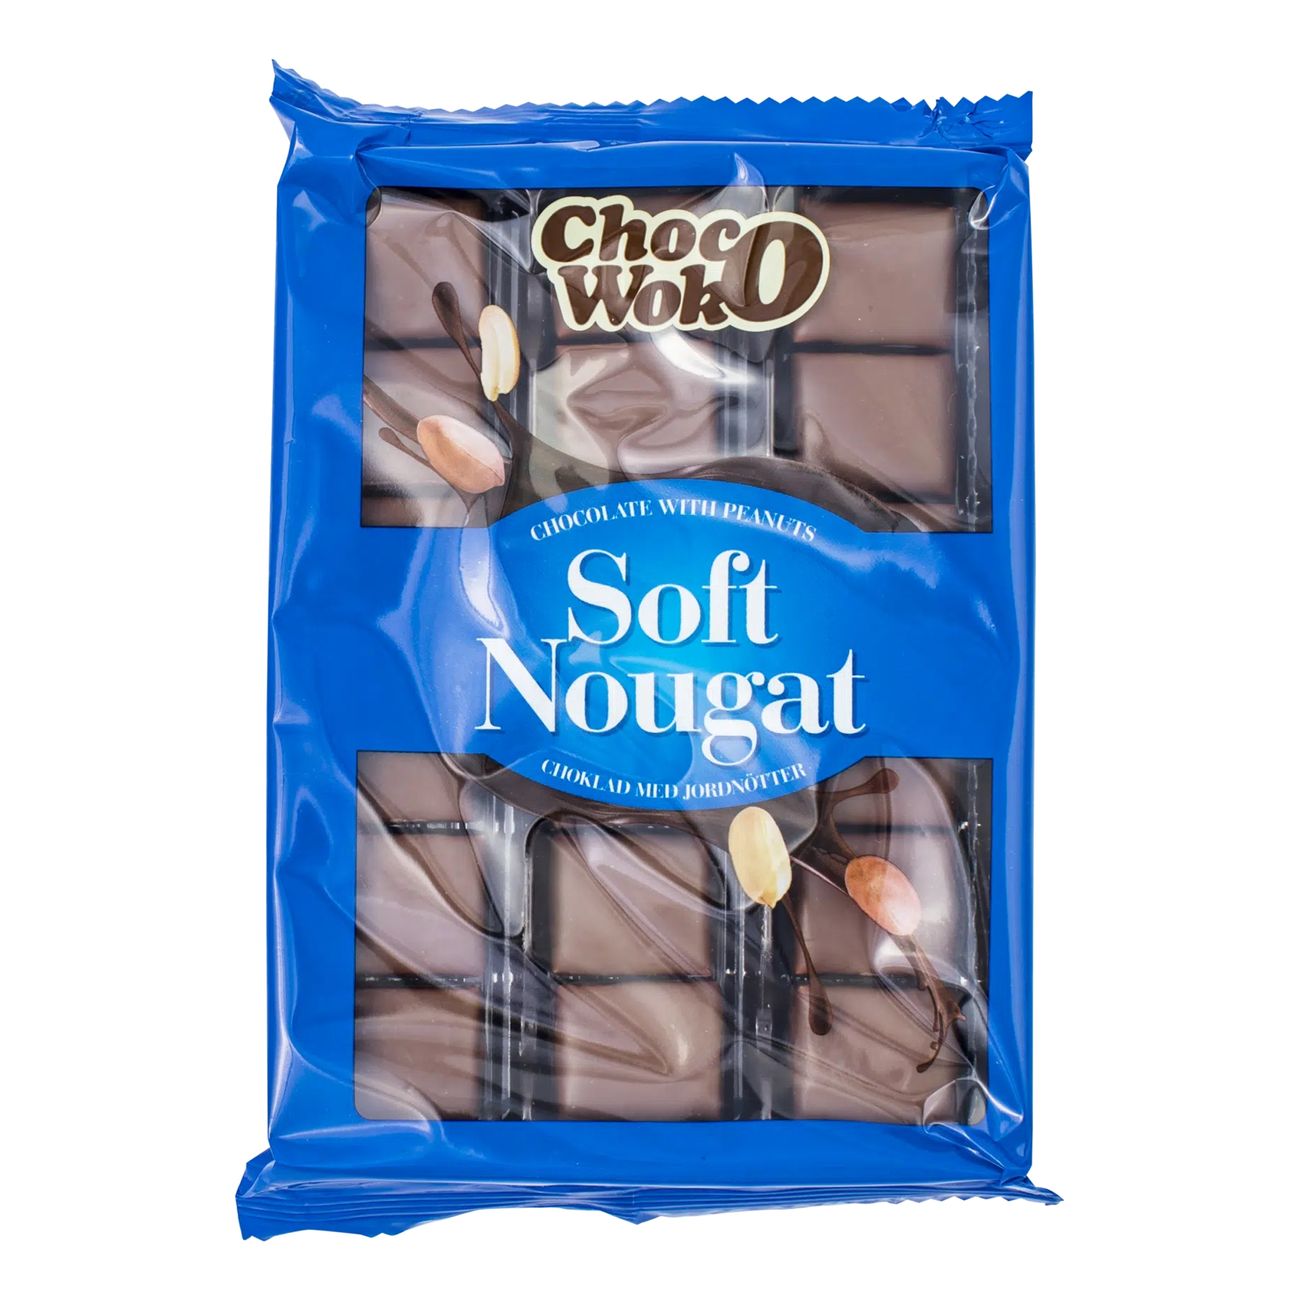 soft-nougat-chokladjordnot-choco-woko-100759-1